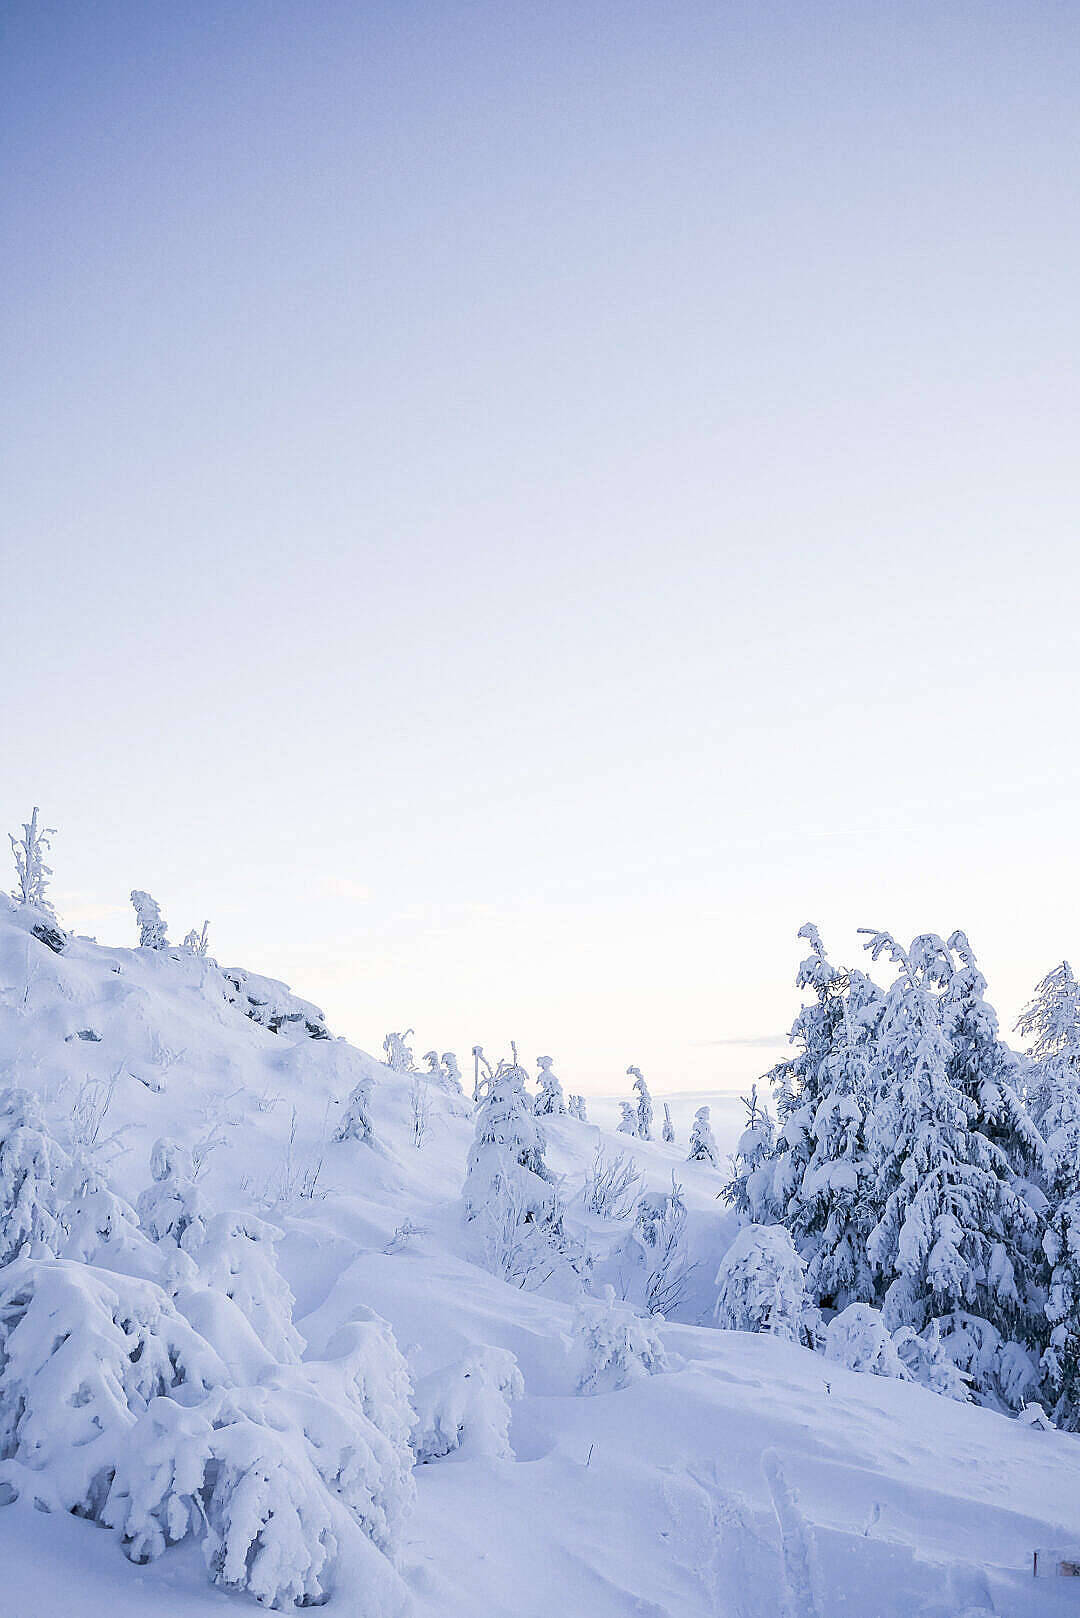 Impresionantebosque Nevado De Invierno Para Iphone Fondo de pantalla